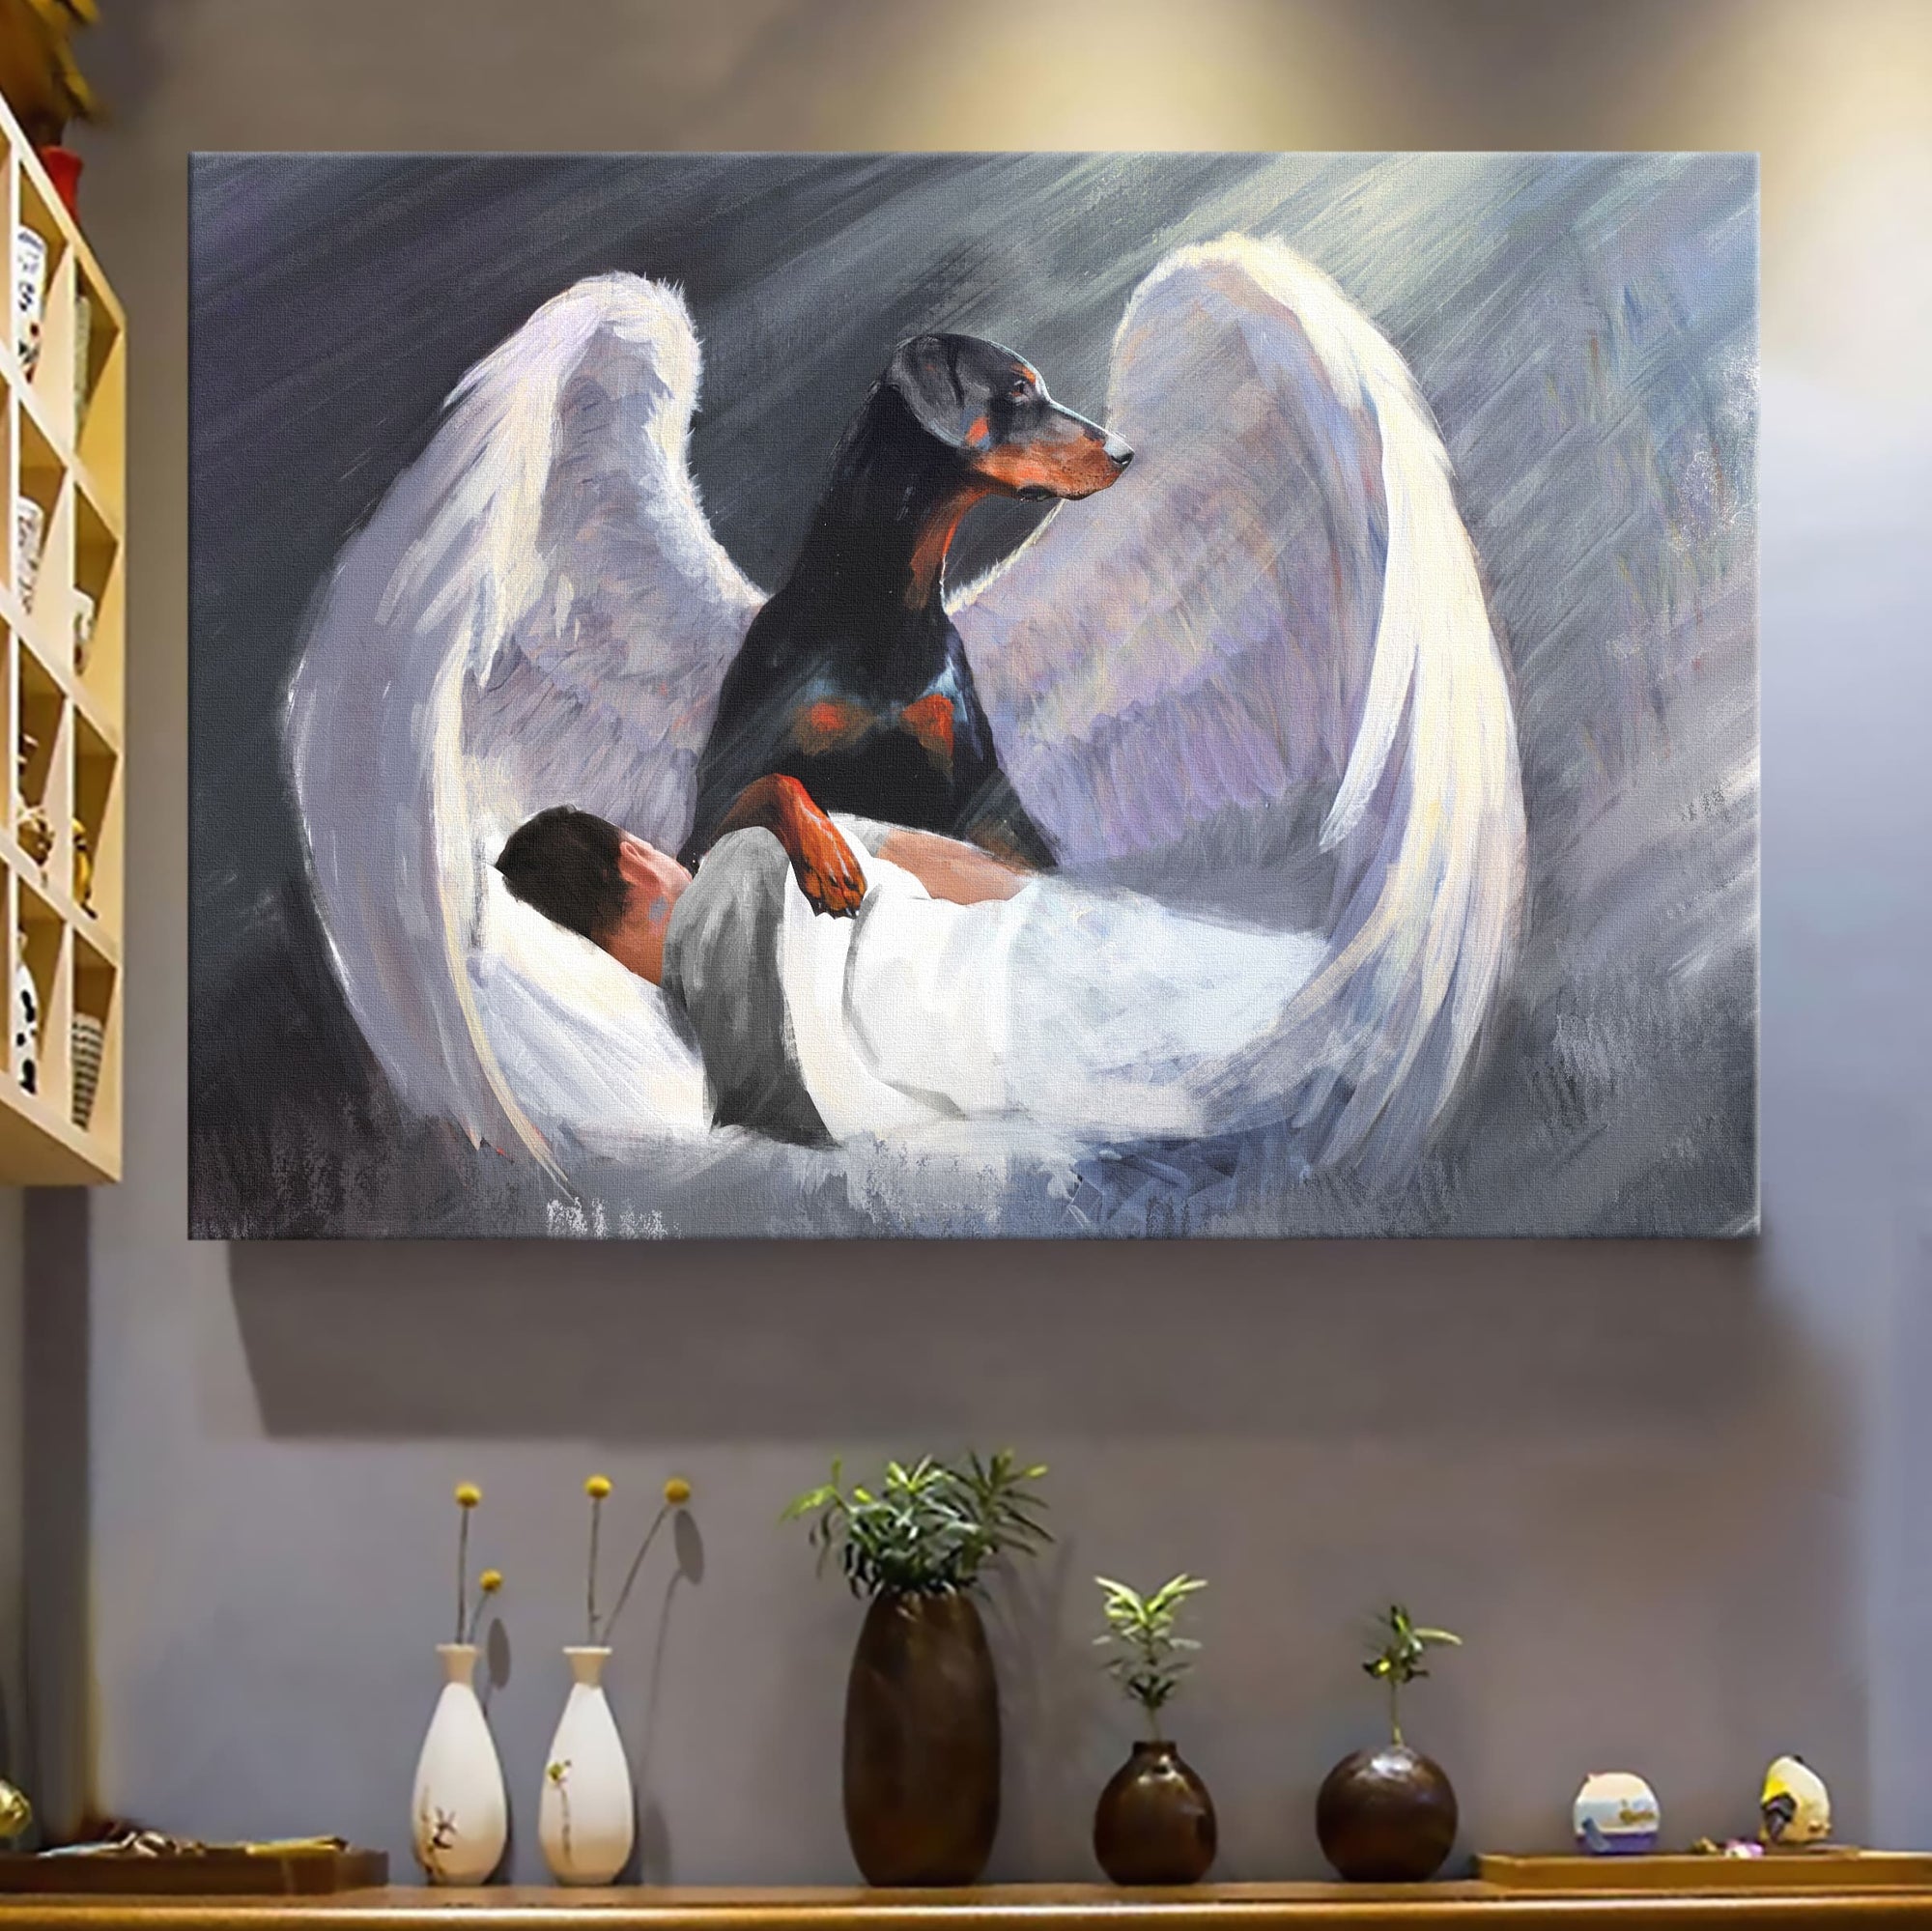 Sleeping man, Doberman, Beautiful Wings, I'll protect you - Doberman Landscape Canvas Prints, Wall Art